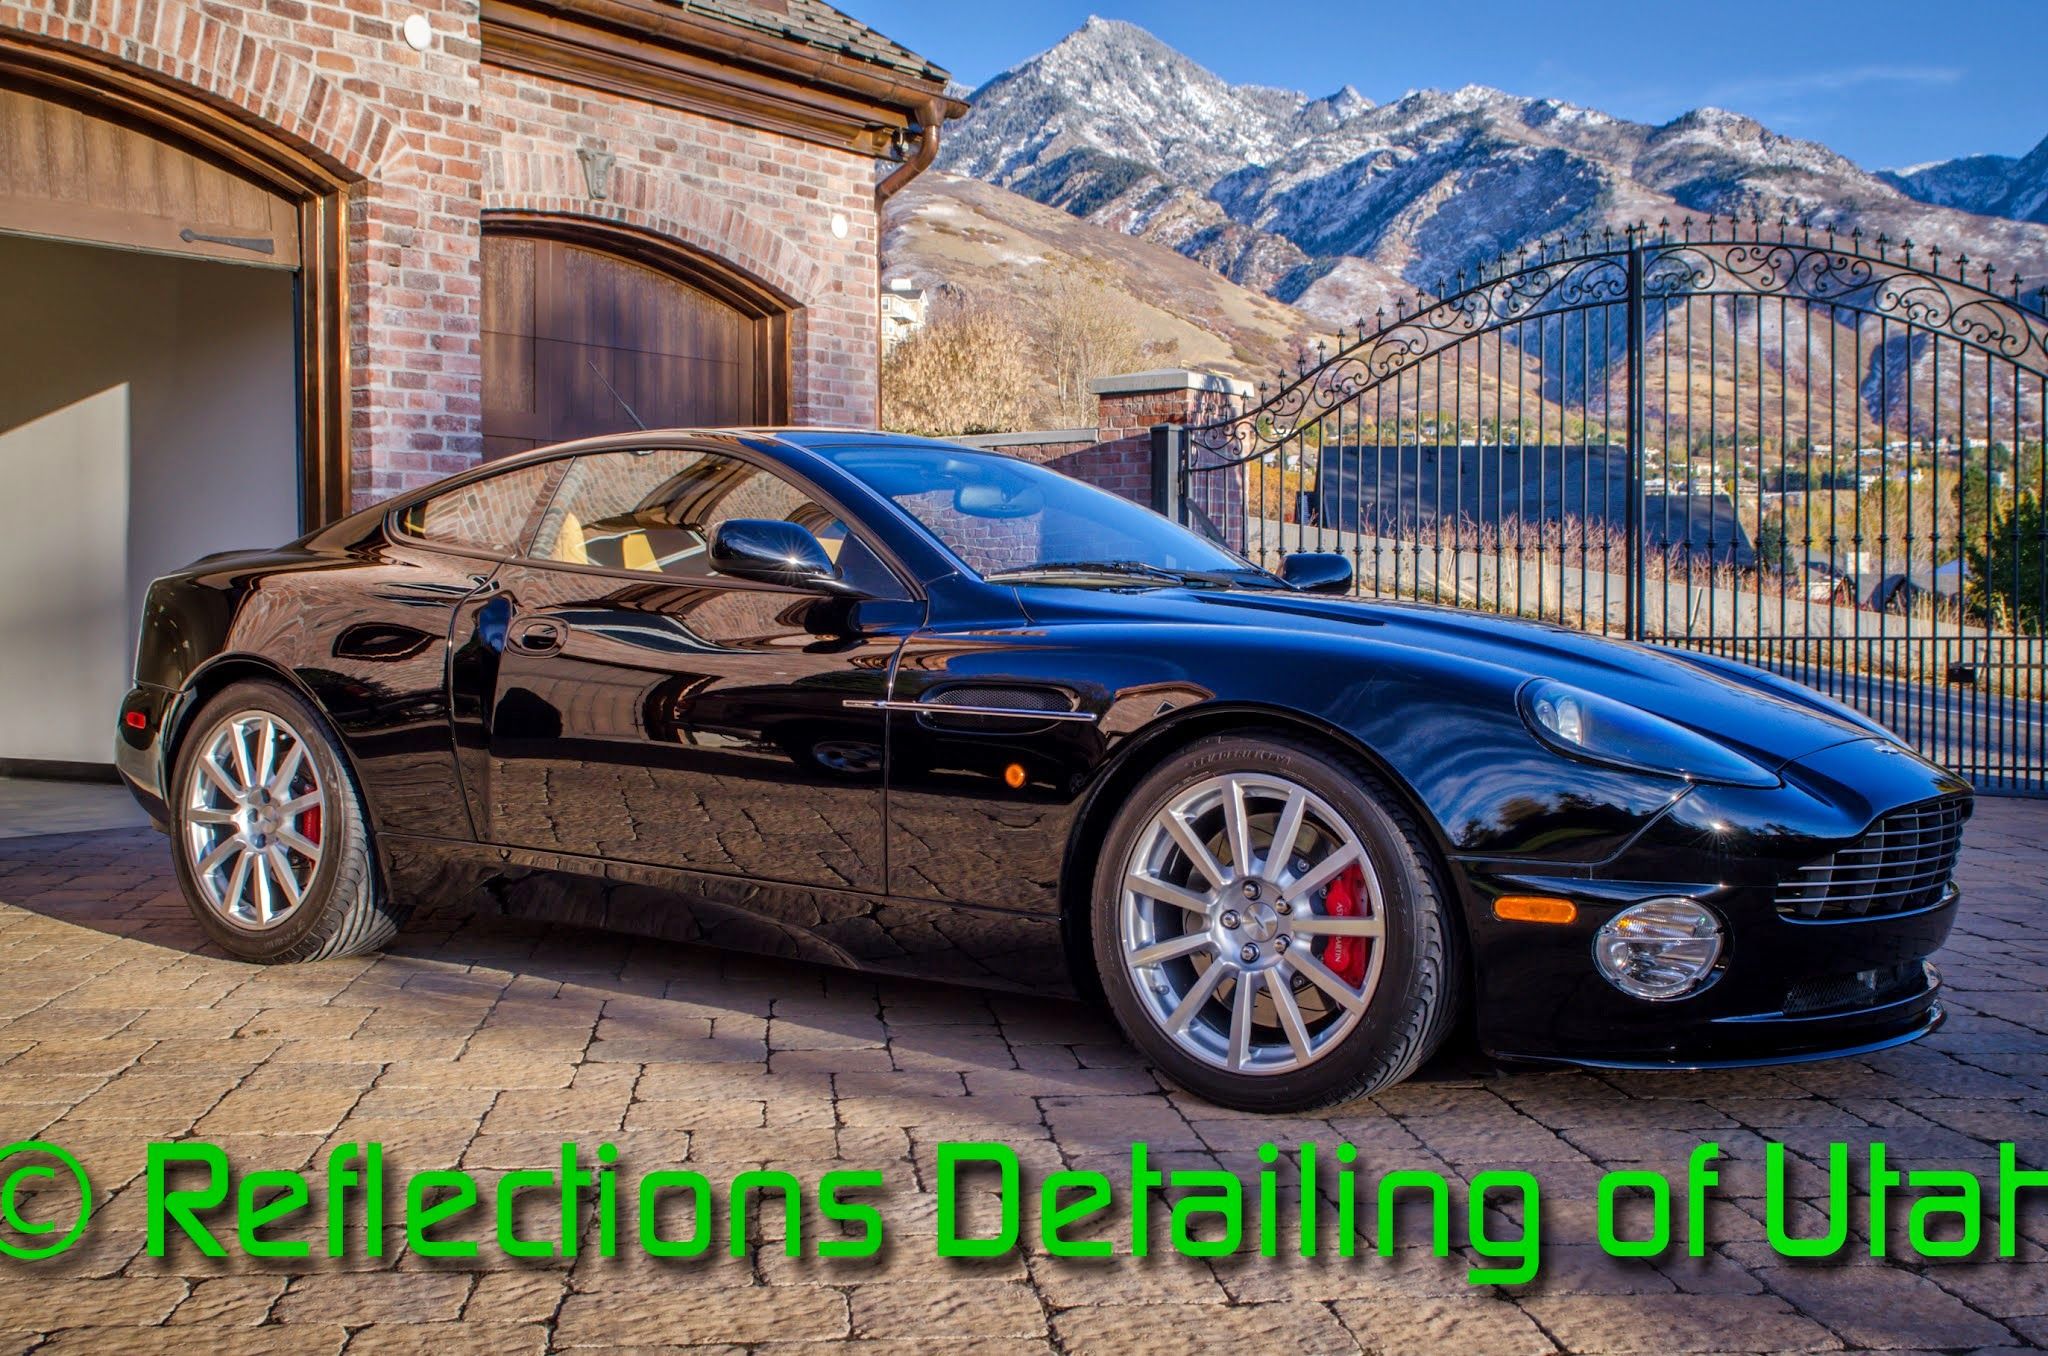 Reflections Auto Detailing of Utah LLC